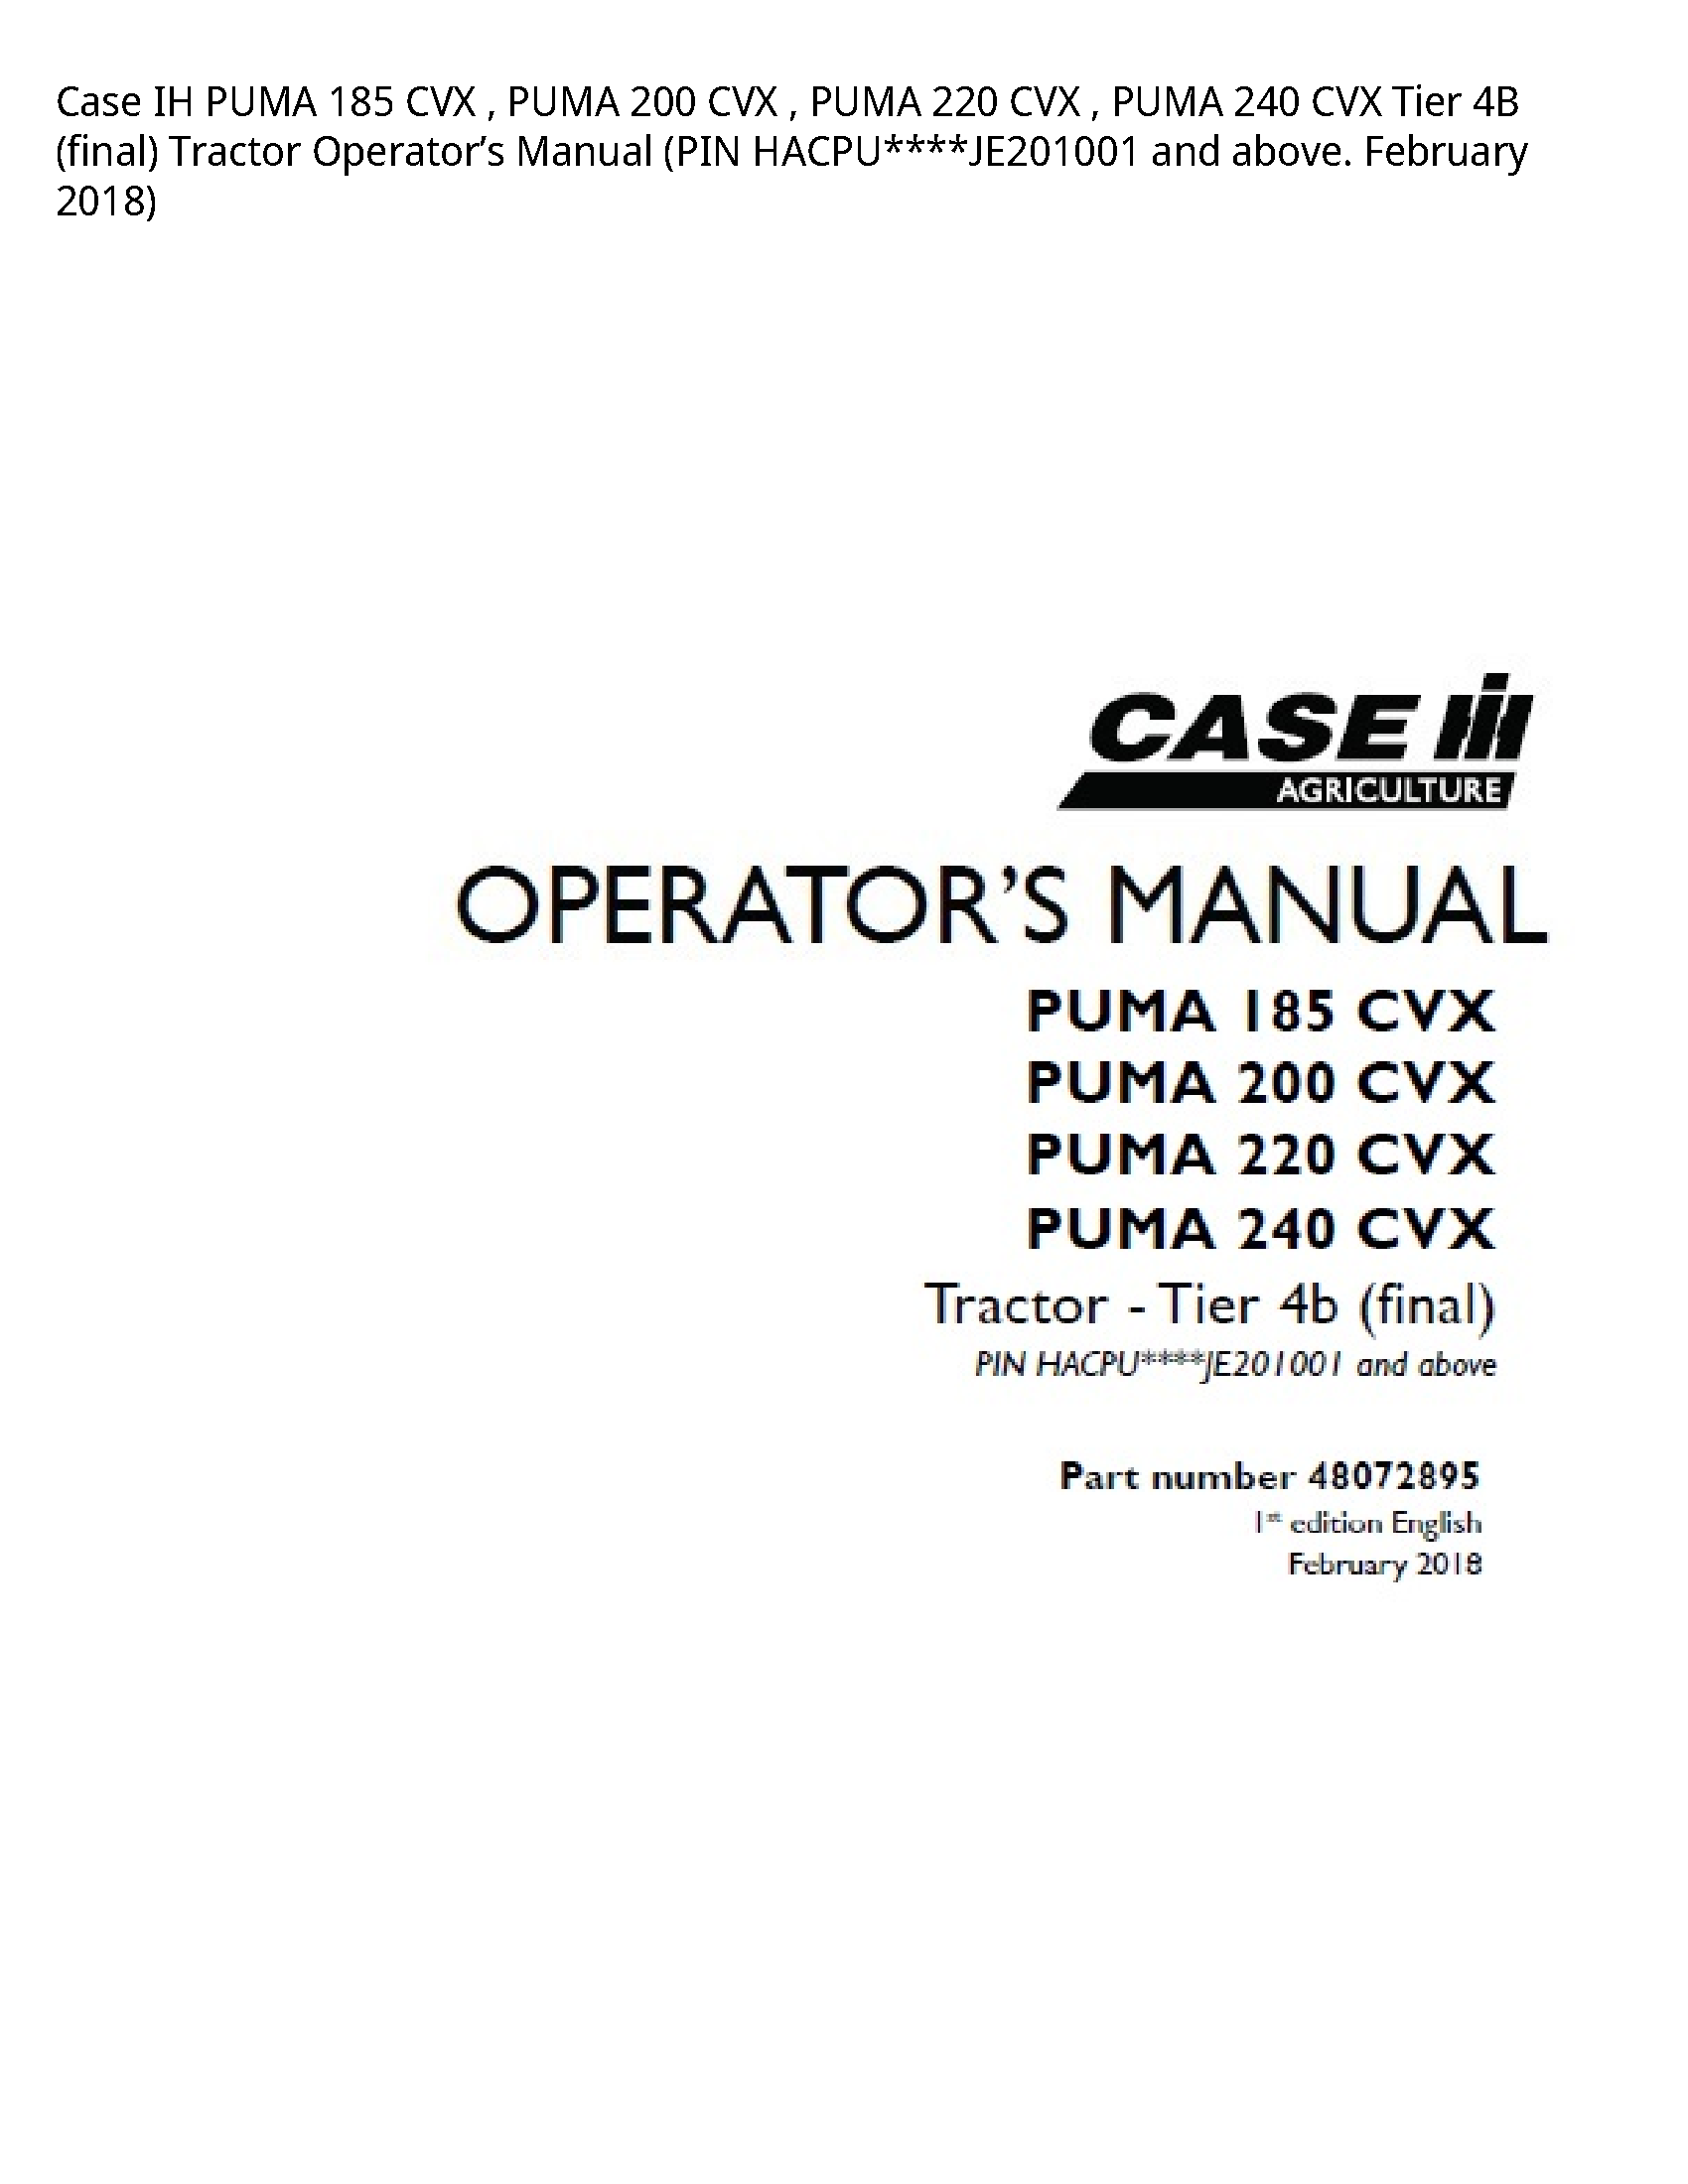 Case/Case IH 185 IH PUMA CVX PUMA CVX PUMA CVX PUMA CVX Tier (final) Tractor Operator’s manual